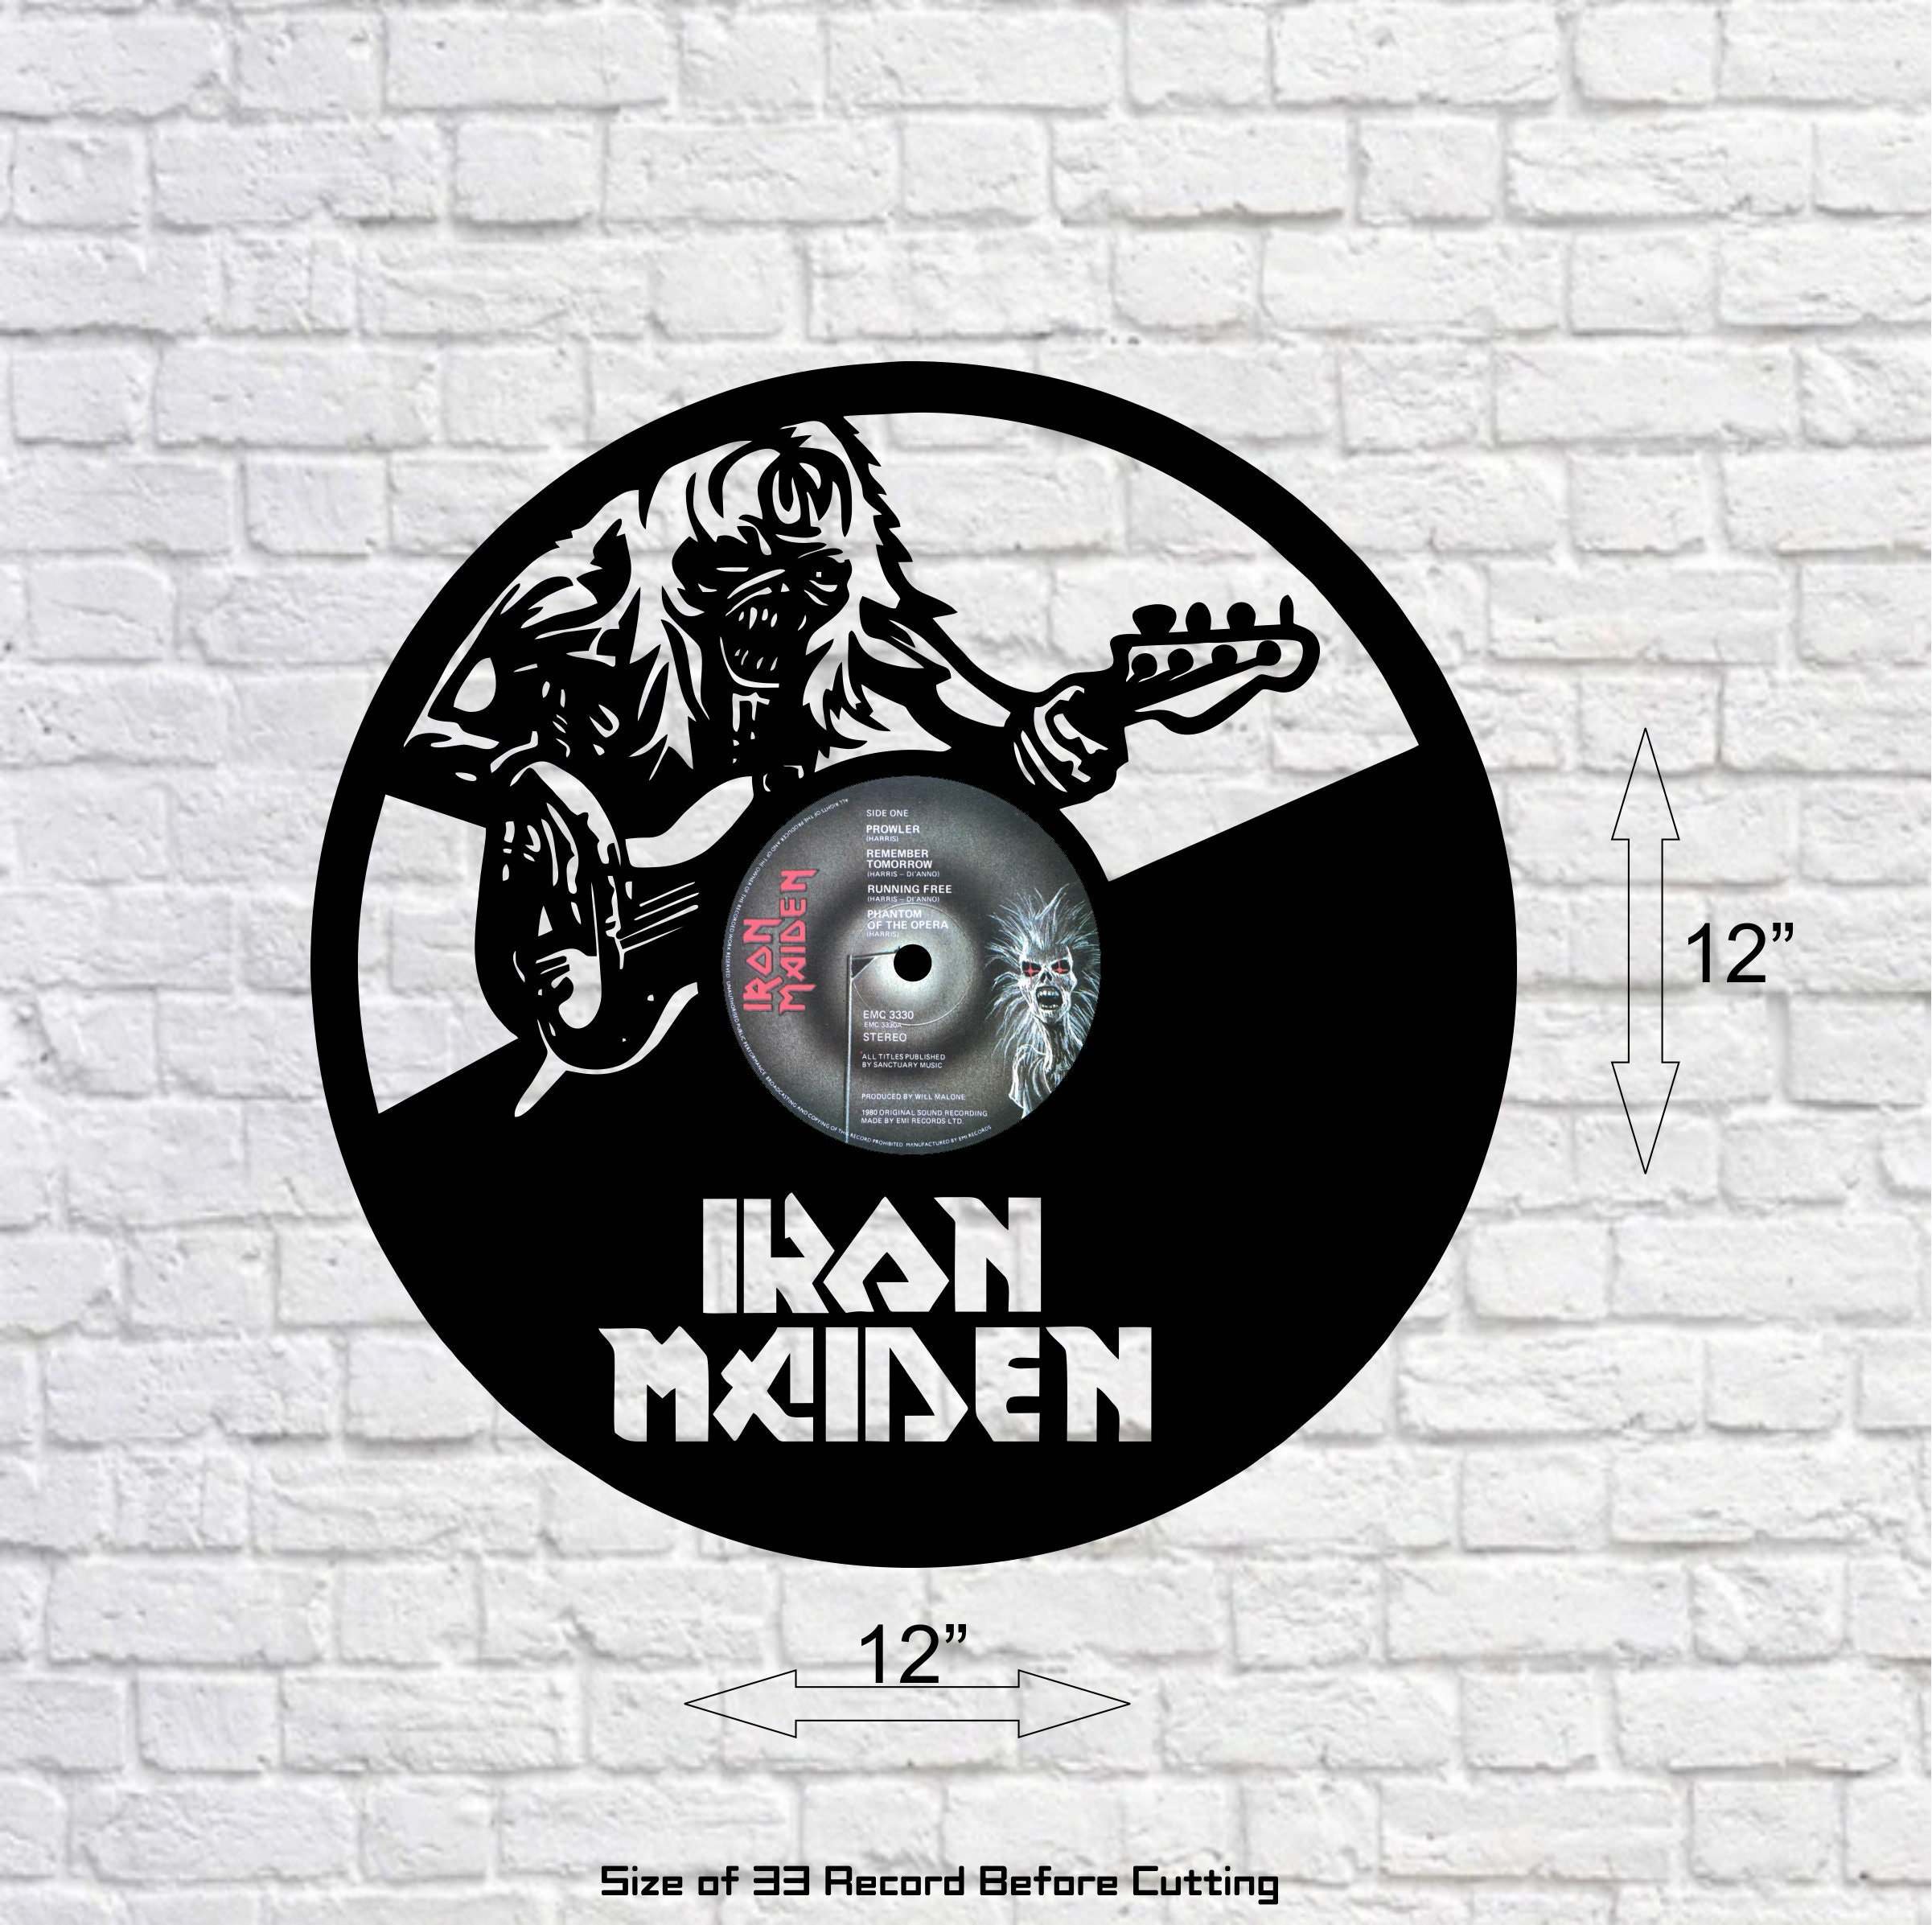 Iron Maiden Laser Cut Vinyl Record Art Record Cutout - Etsy